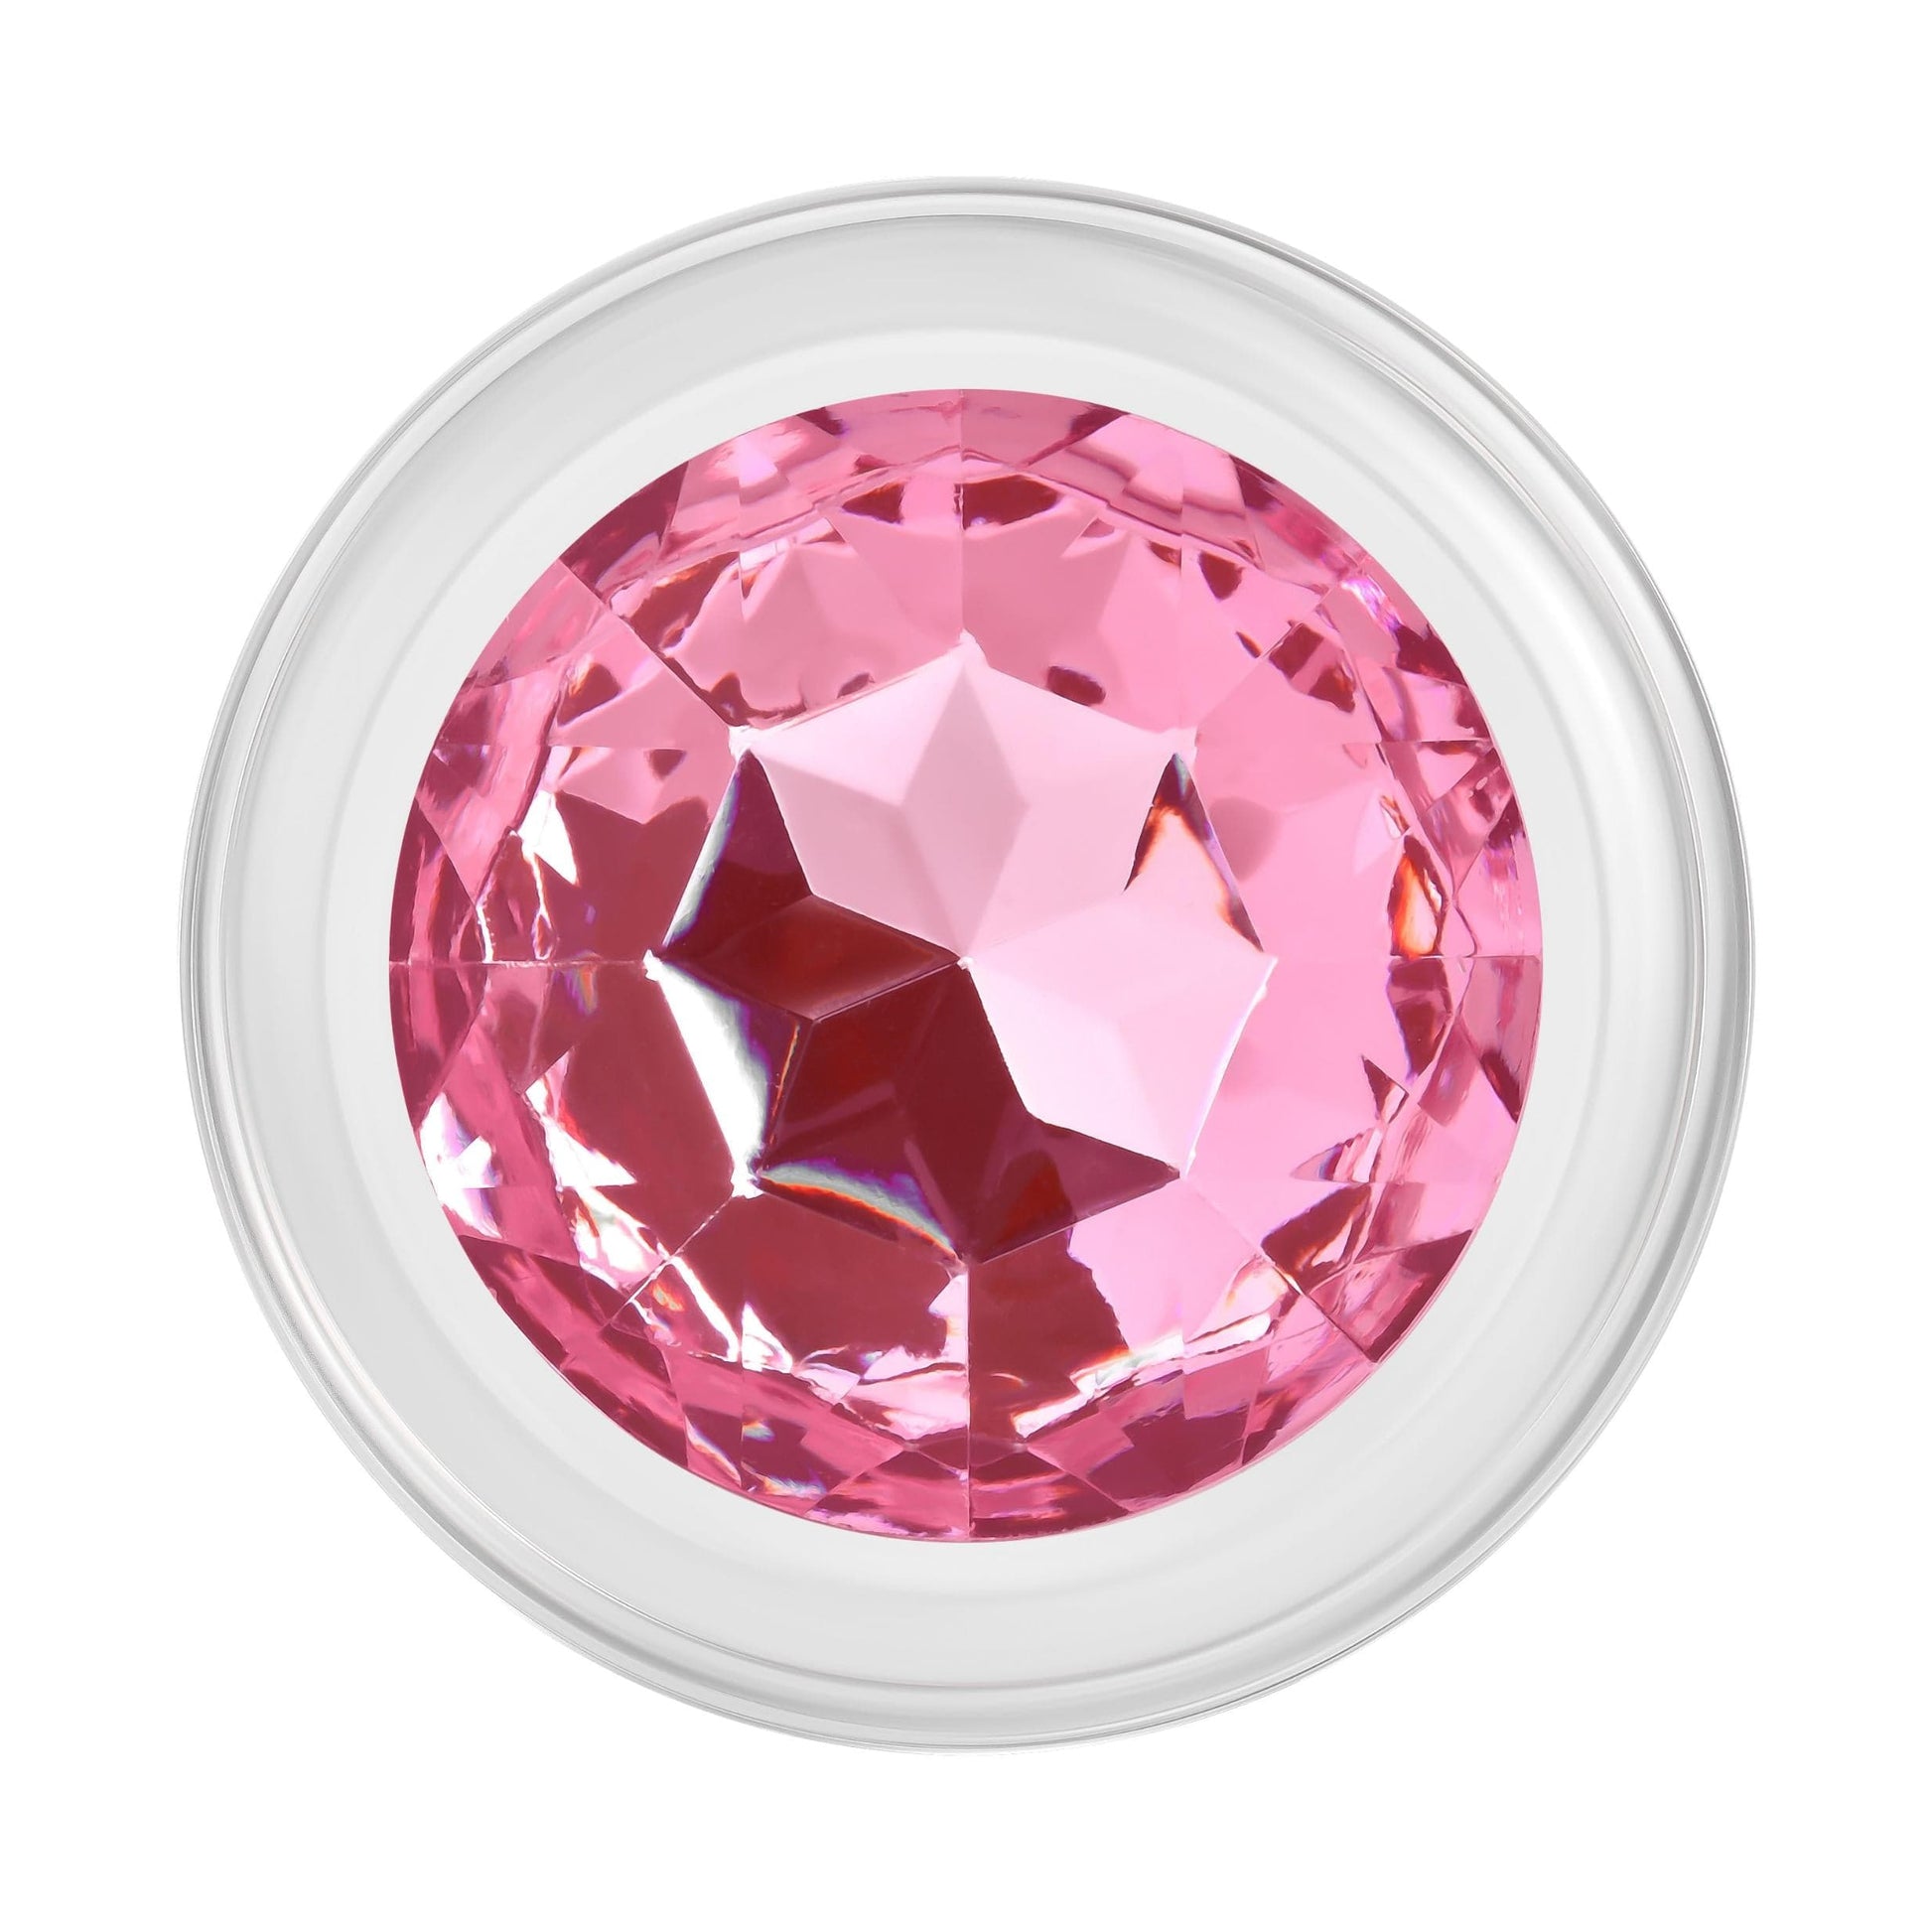 pink gem glass plug medium pink